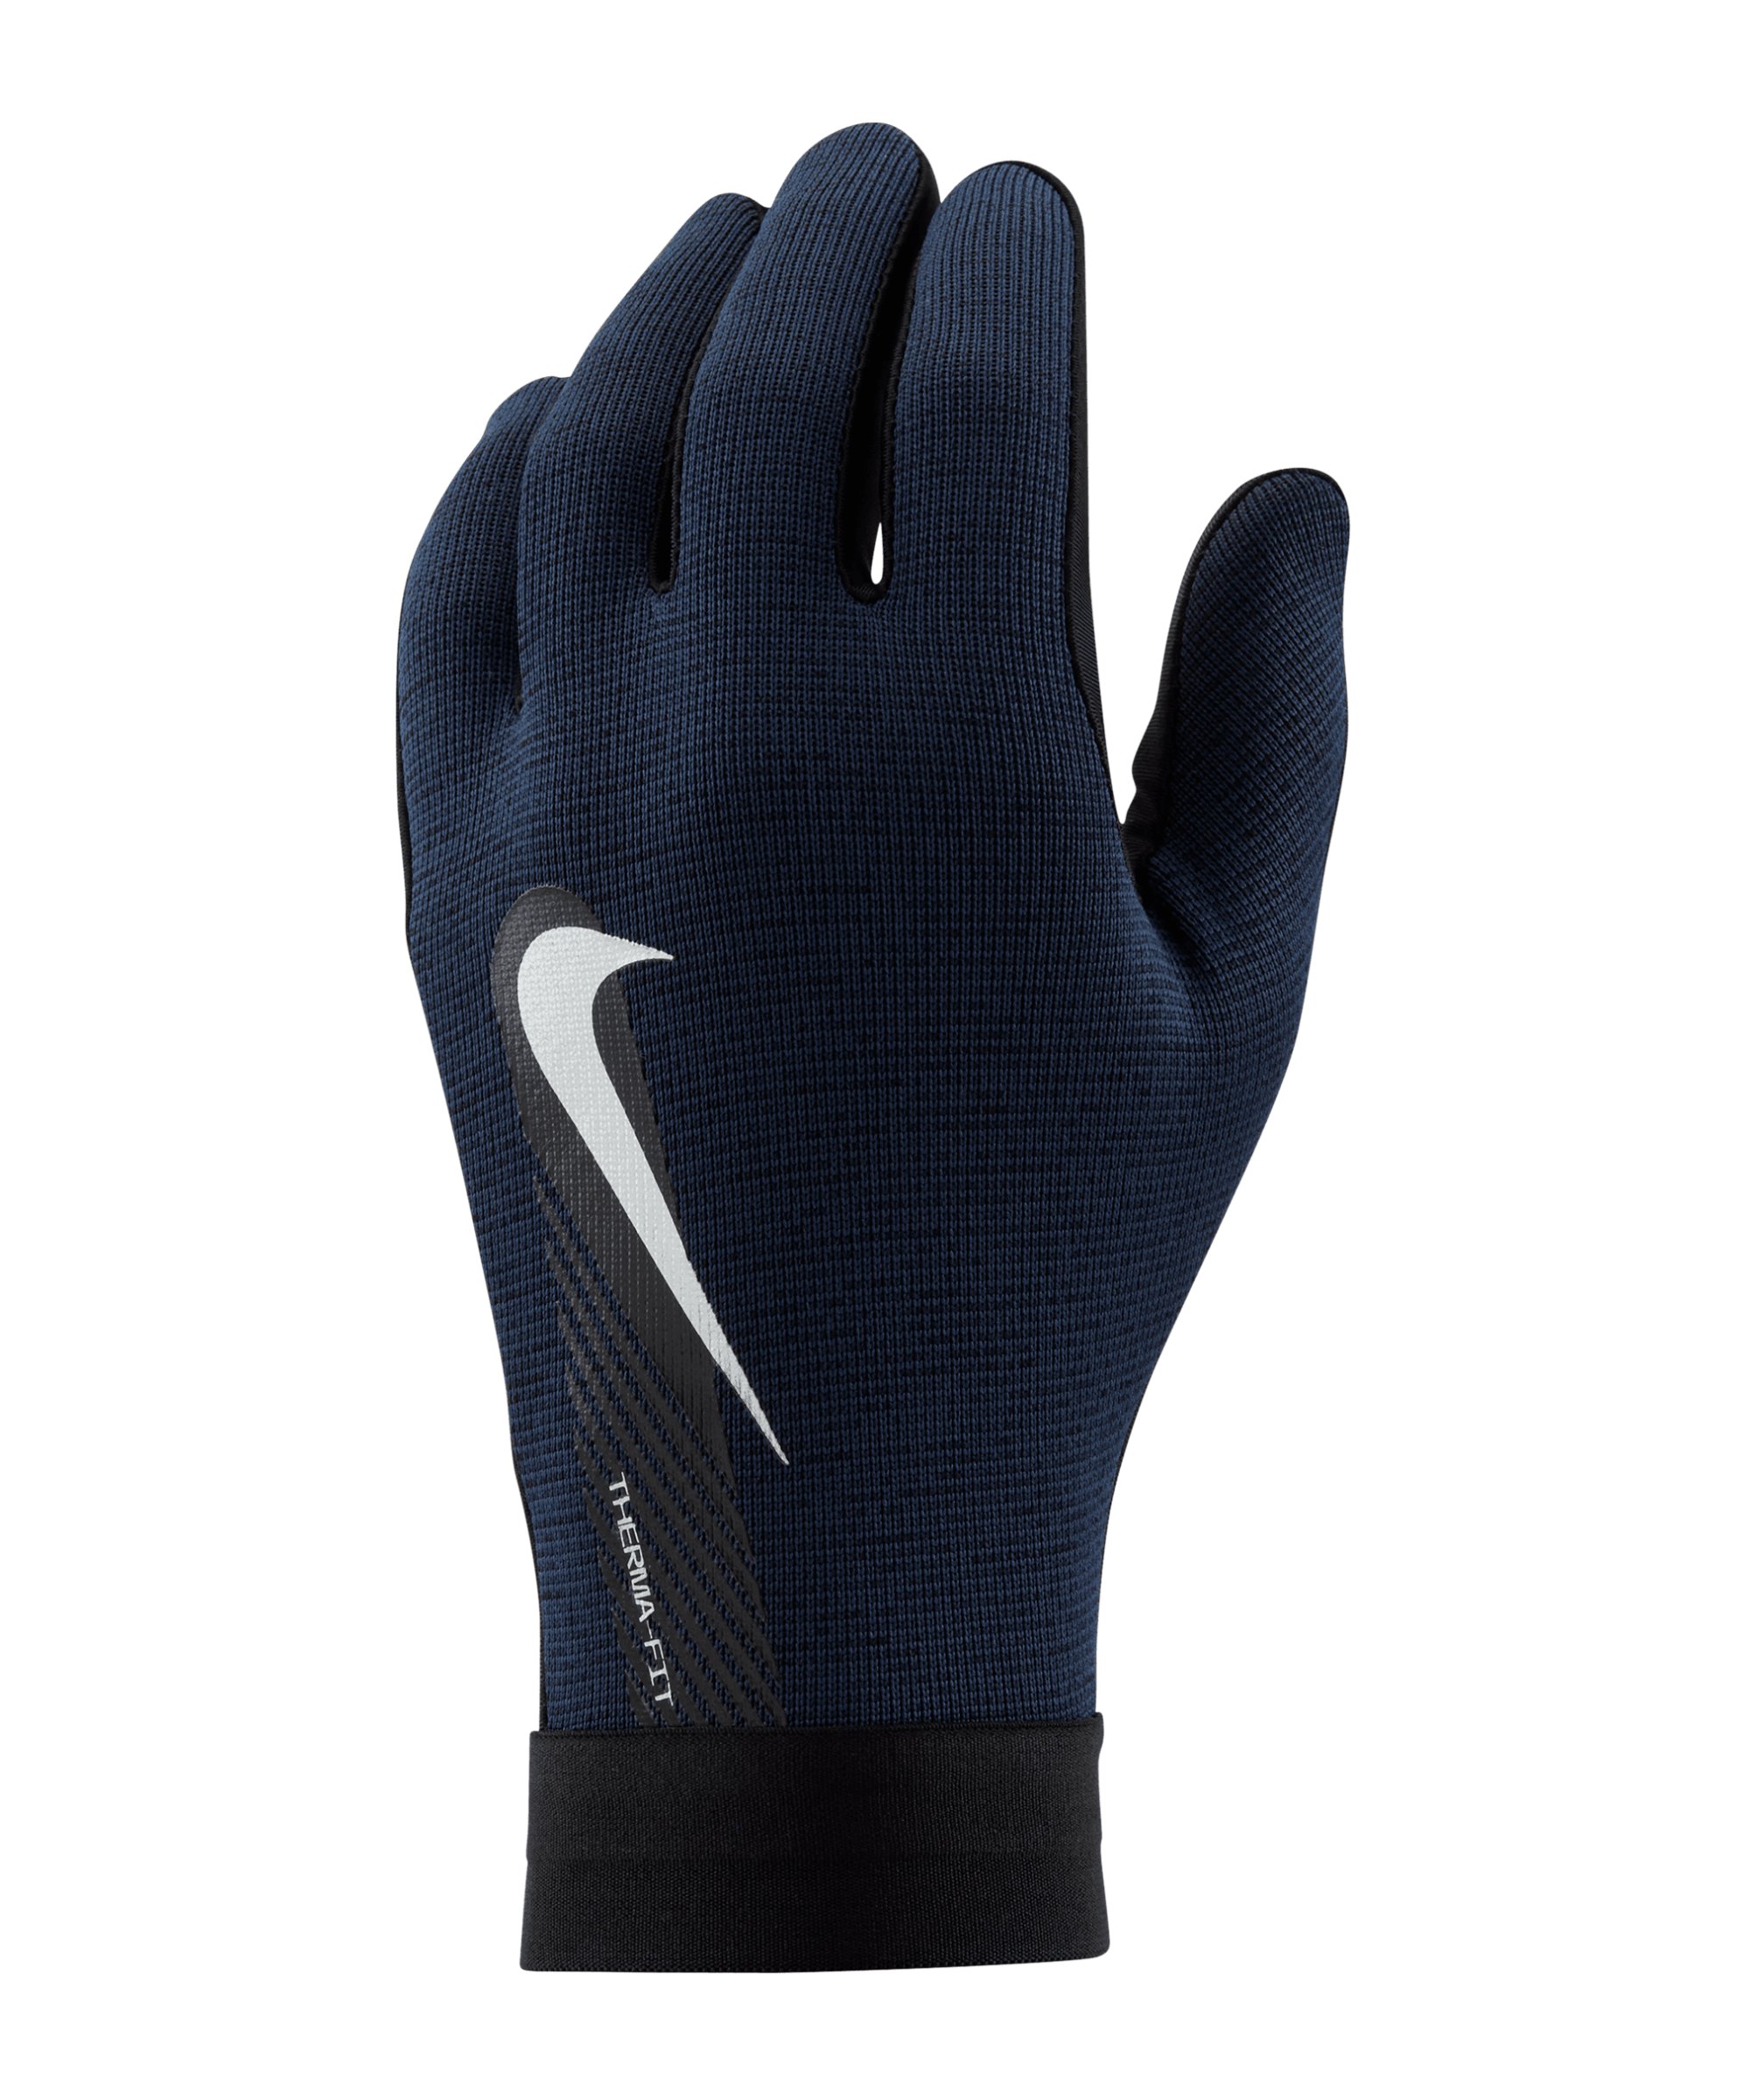 Nike Academy Therma-FIT Spielerhandschuh F011 - schwarz